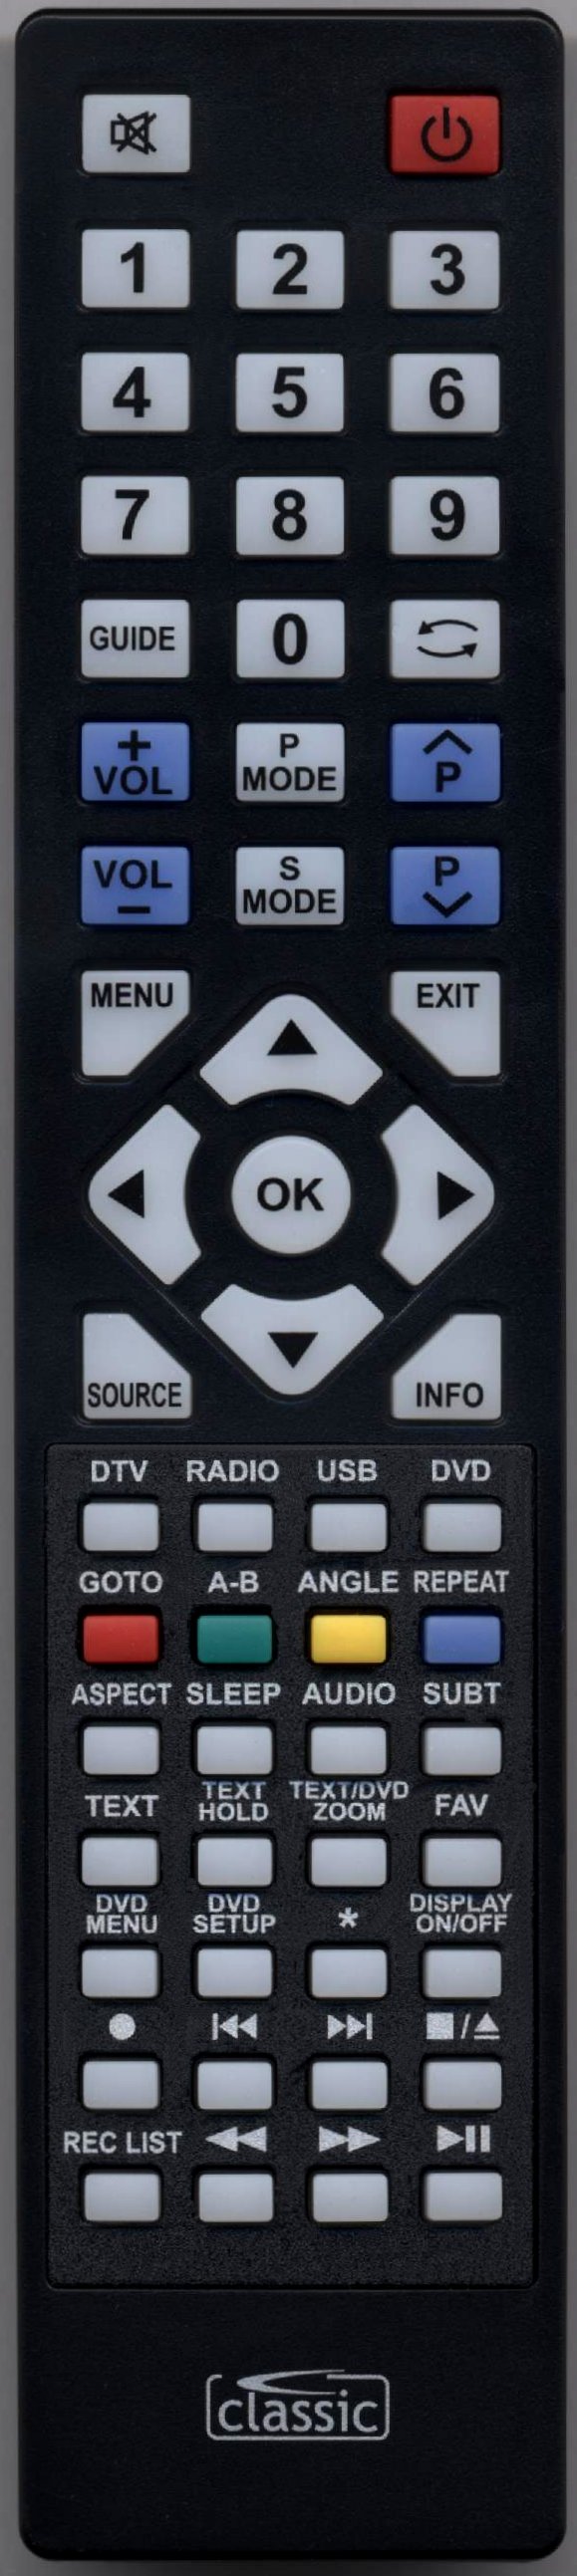 JMB 50-149I-GB-5B2-FHKUP-UK Remote Control Alternative 